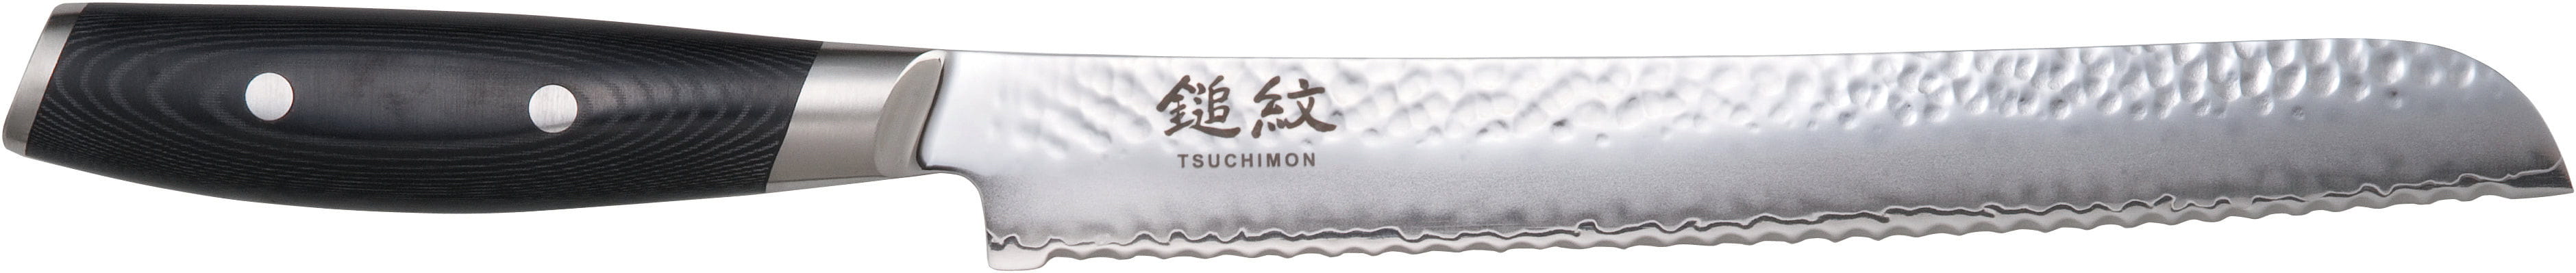 Cuchillo de pan yaxell tsuchimon, 23 cm